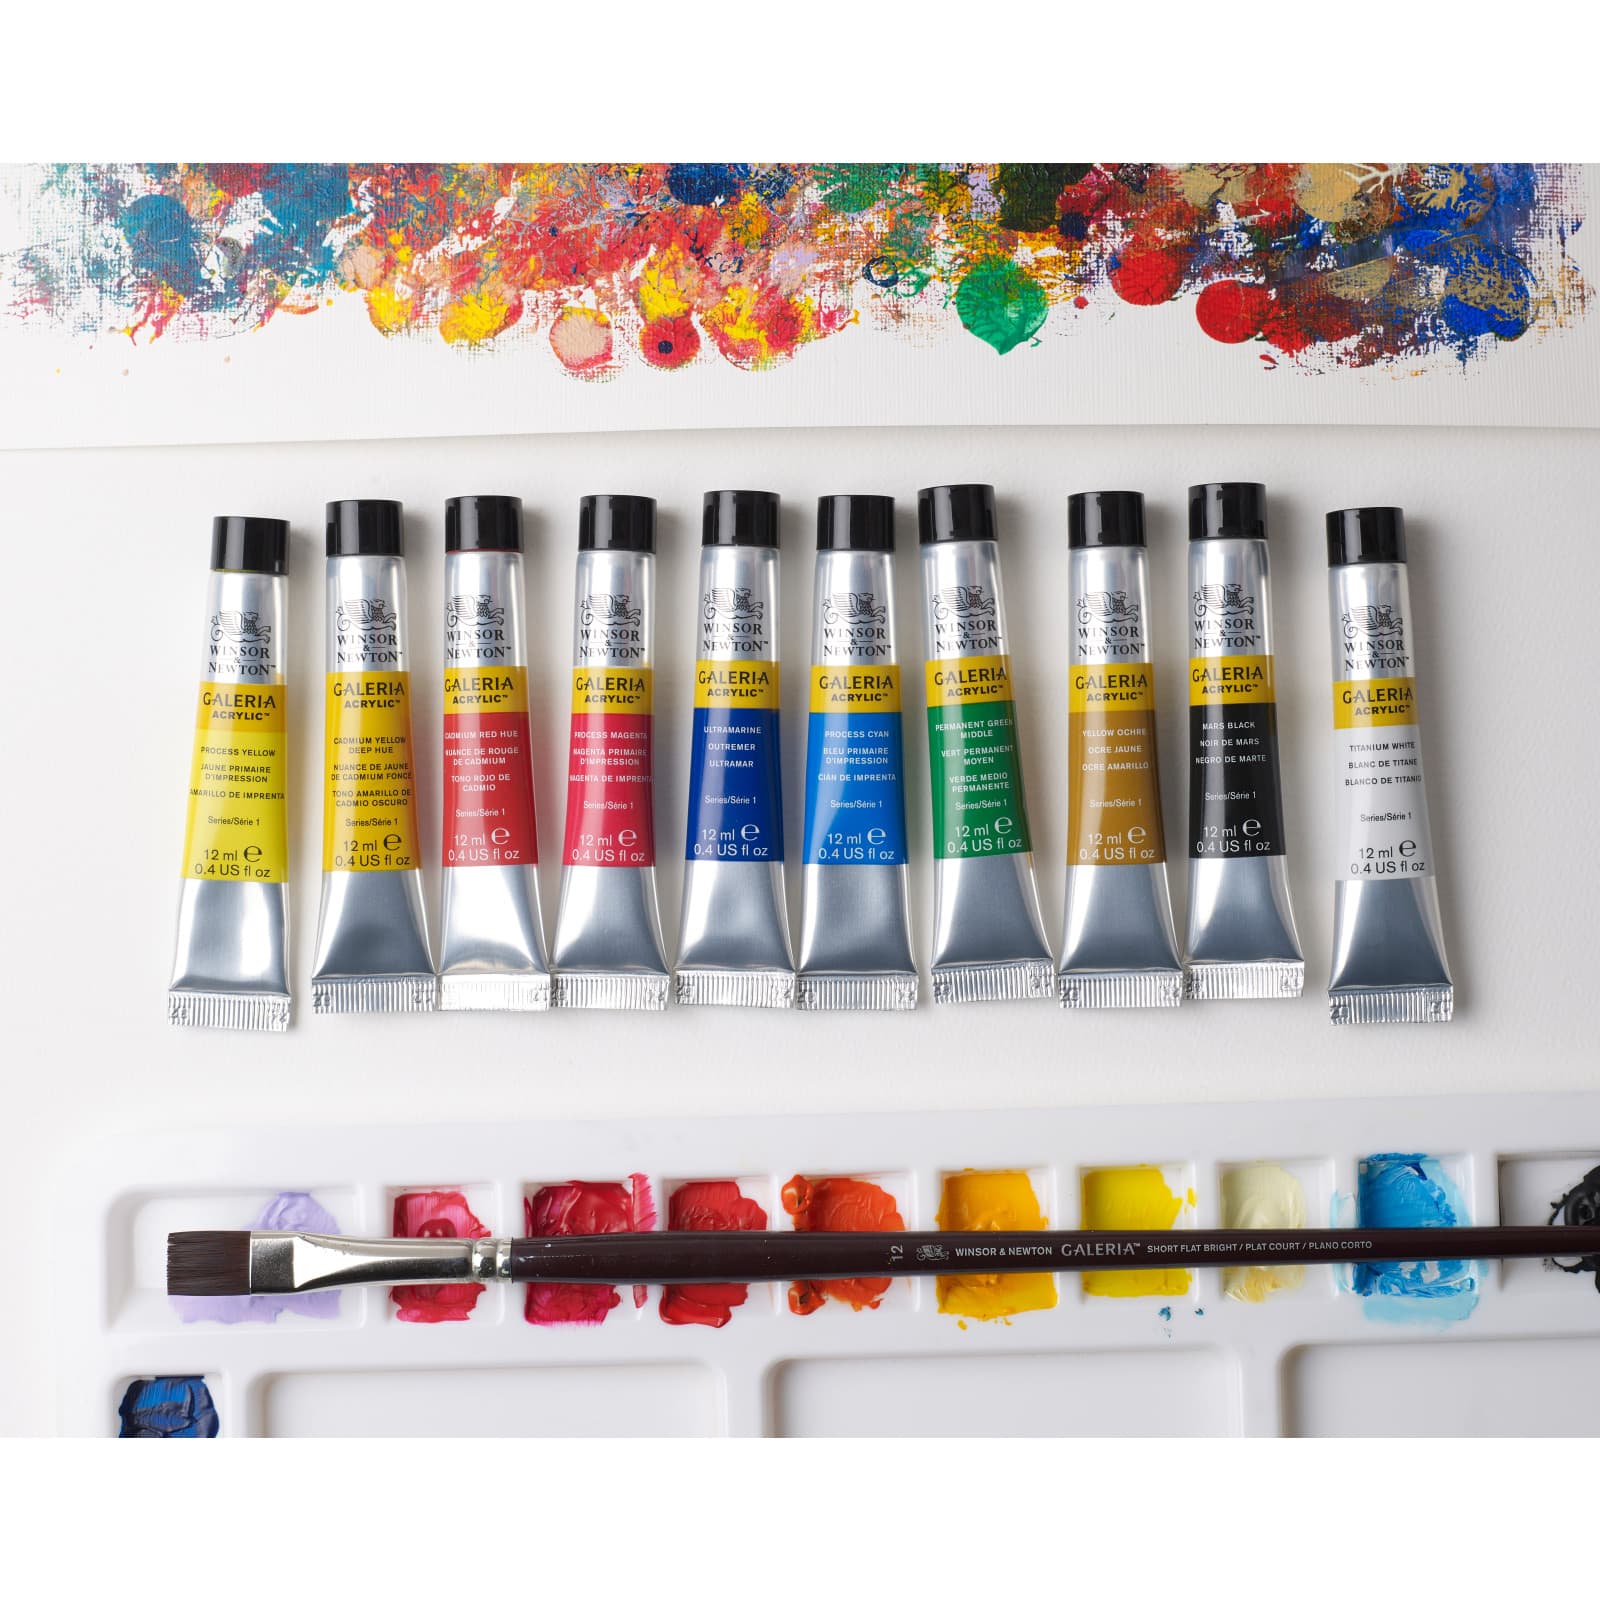 Winsor & Newton™ Galeria Acrylic™ 10 Color Paint Set